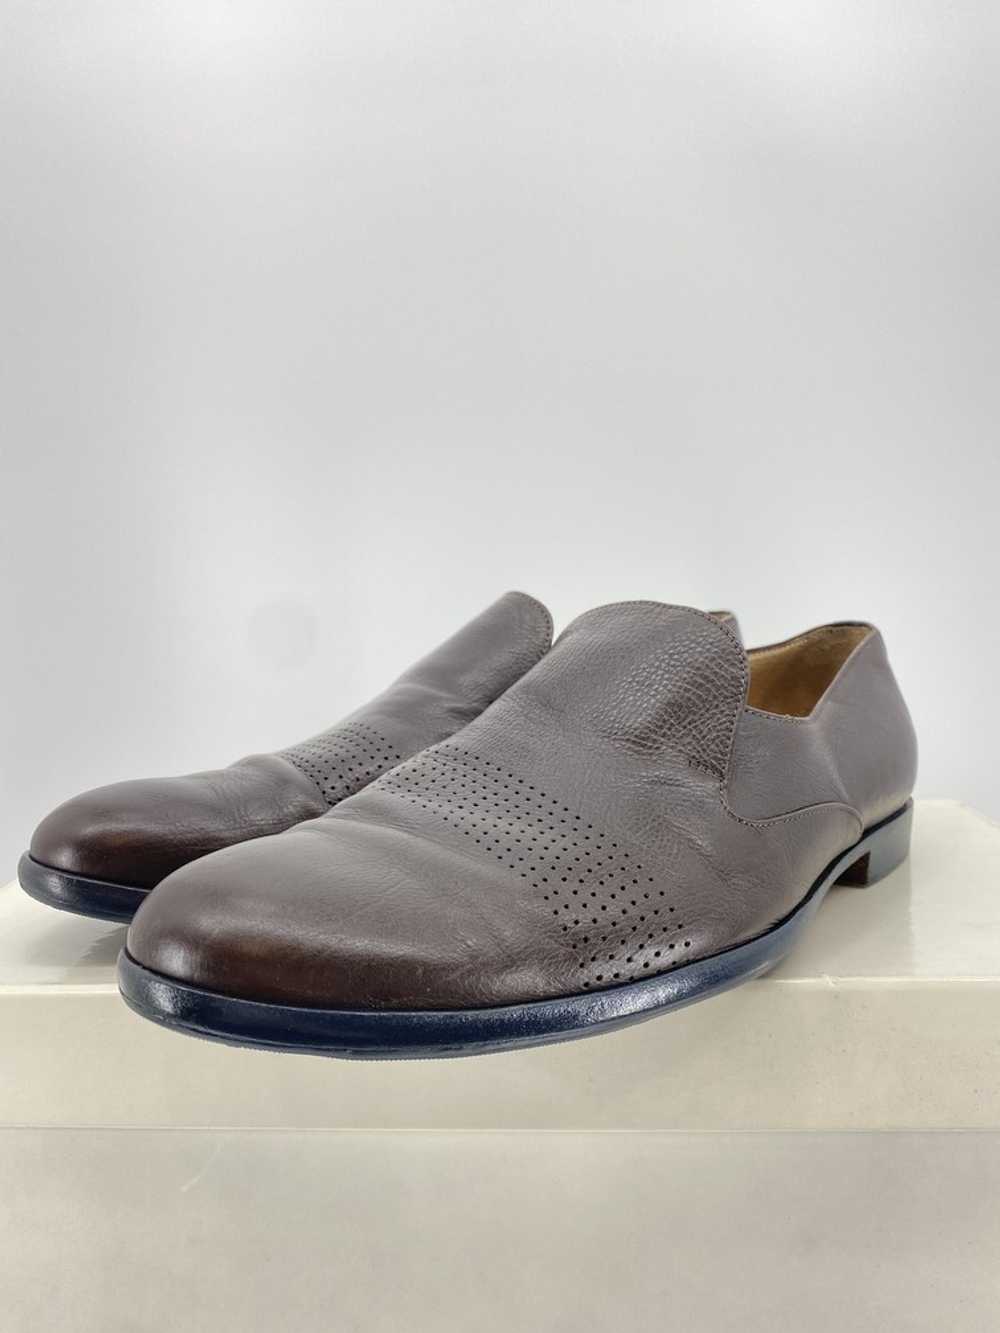 Dries Van Noten Brown Leather Loafers - image 2